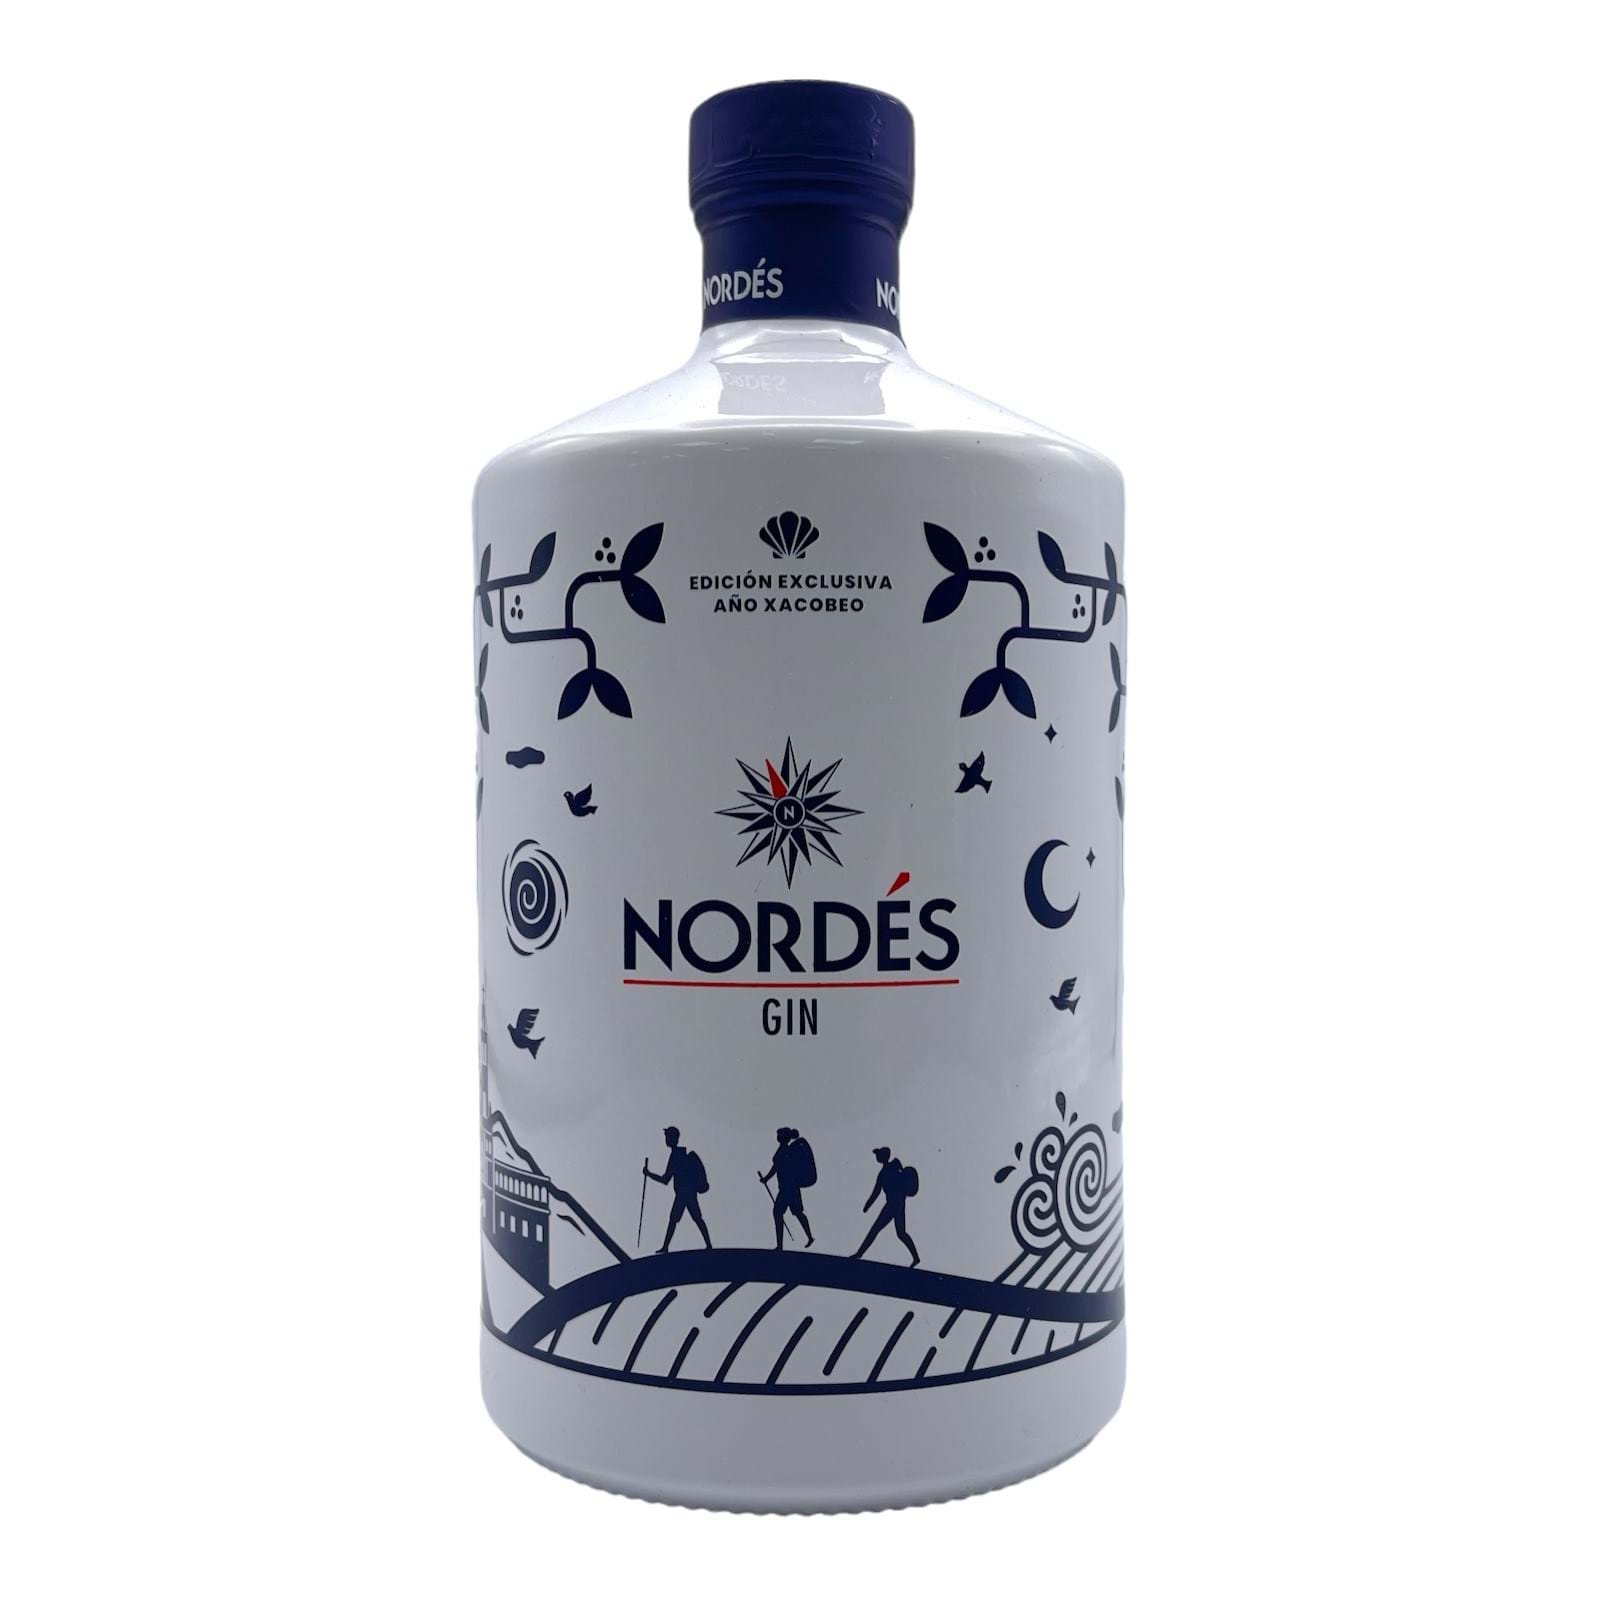 NORDES Atlantic Galician Gin Bottle (70cl) 40%abv - Dunells